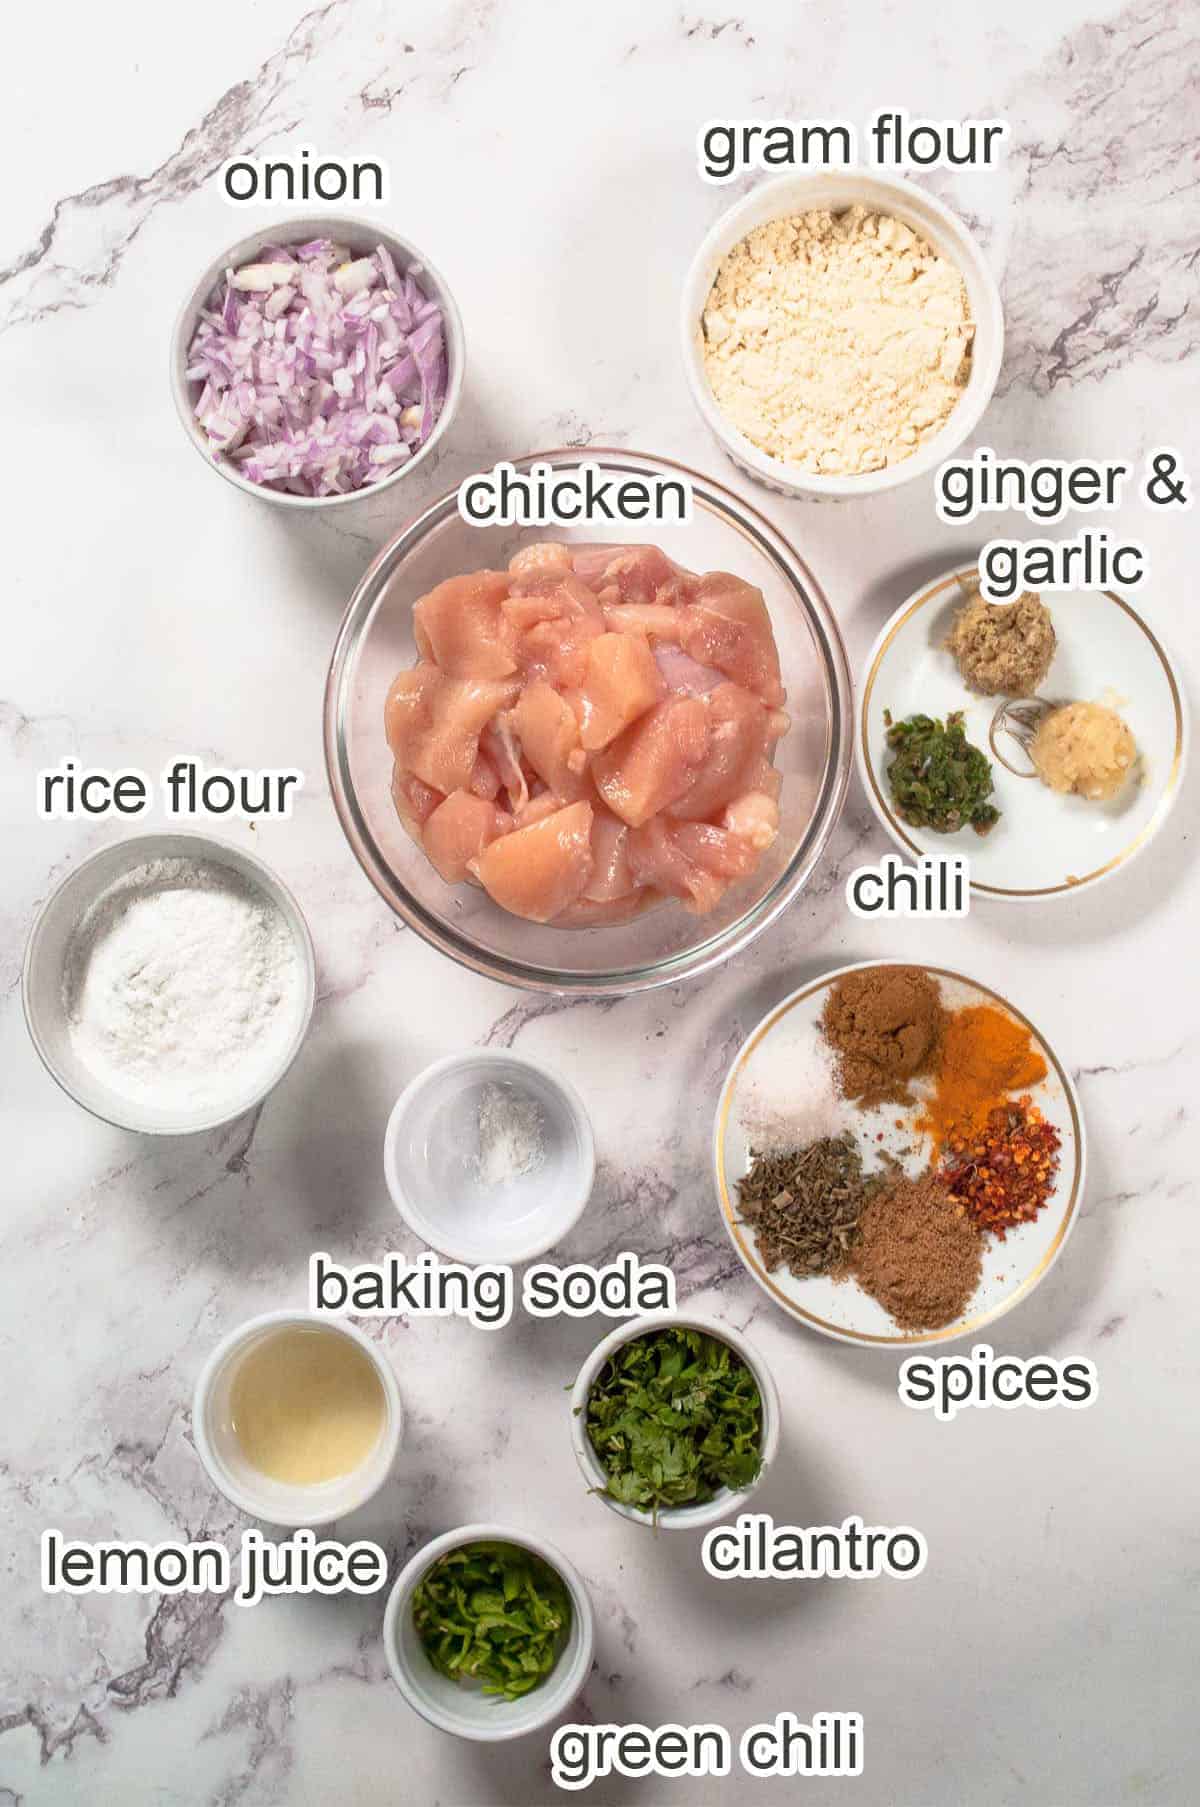 Display of chicken pakora ingredients.